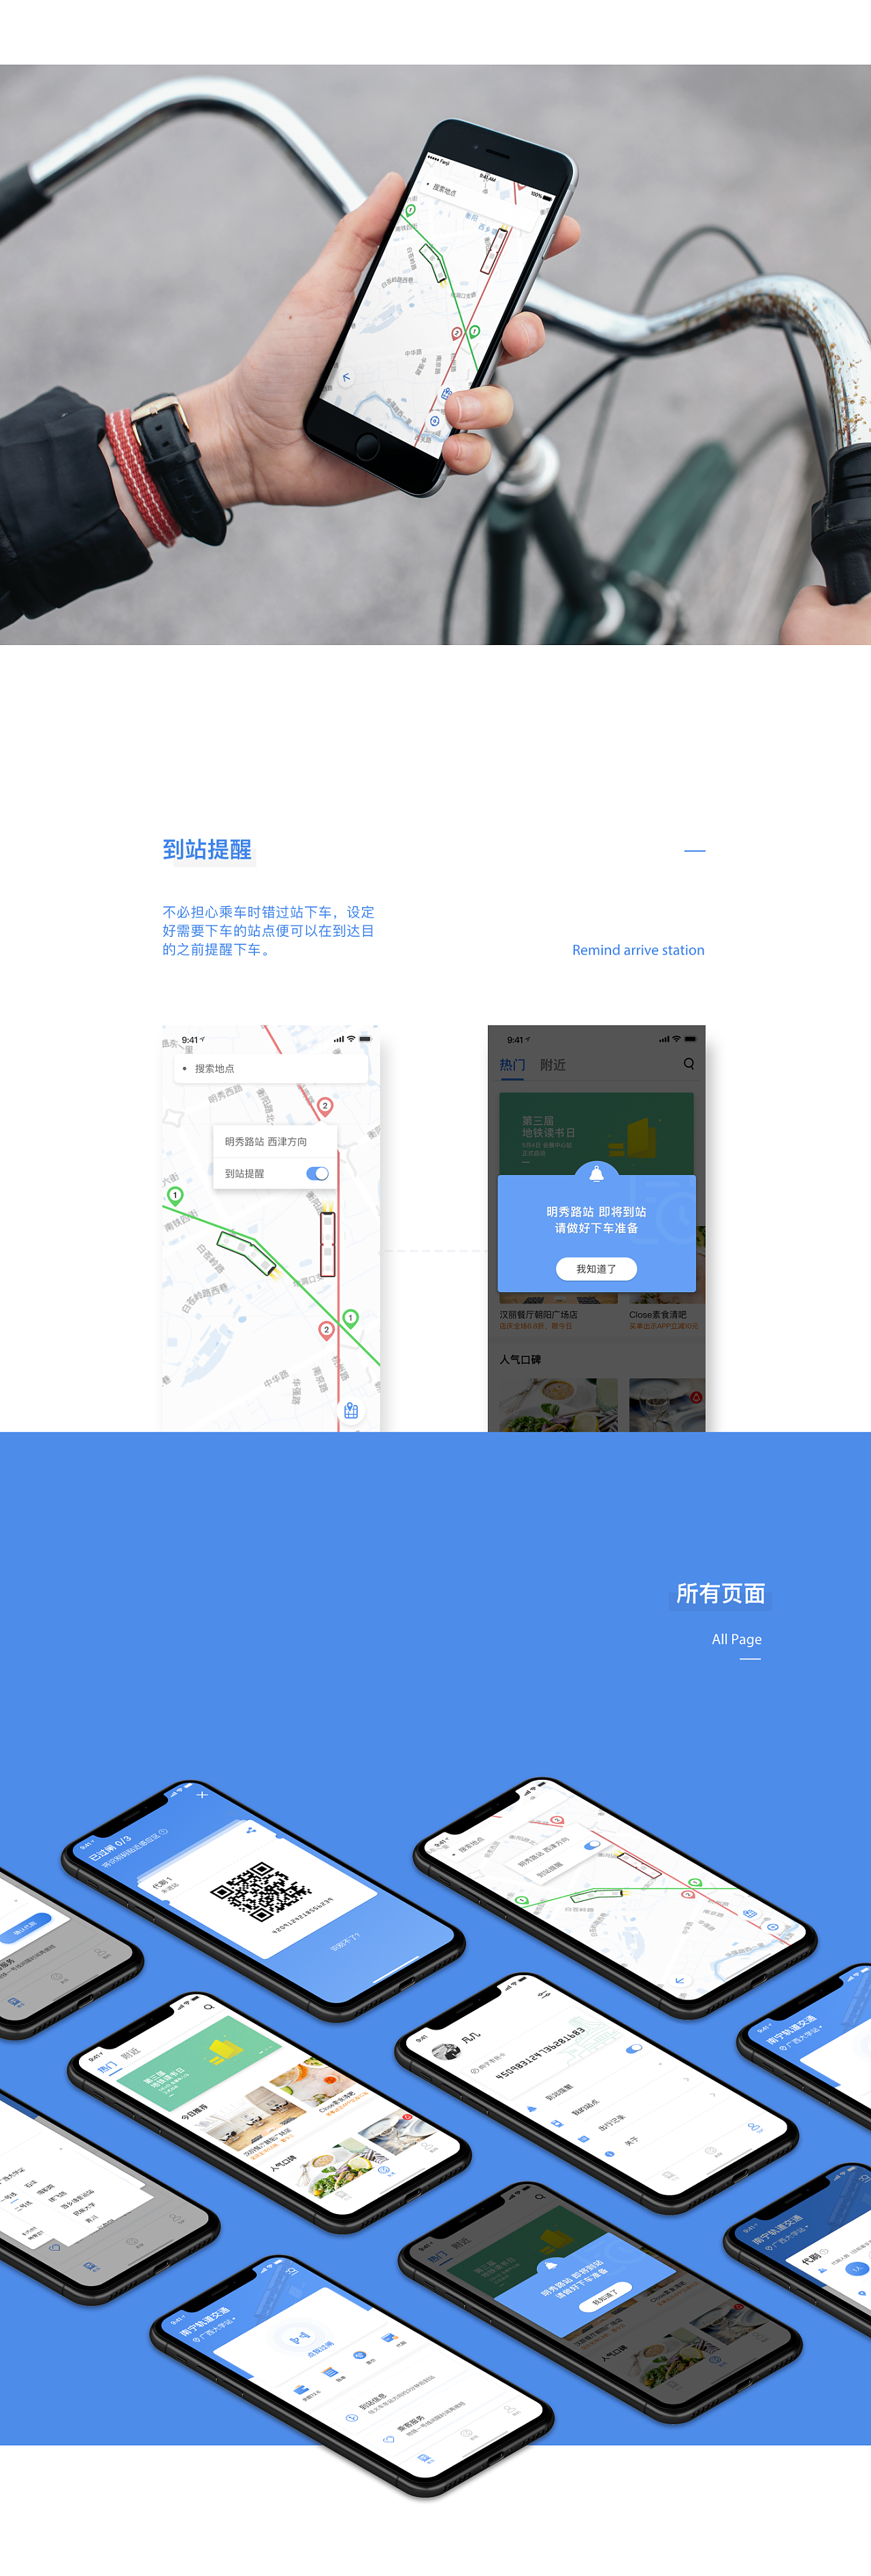 南宁轨道交通App - Redesign